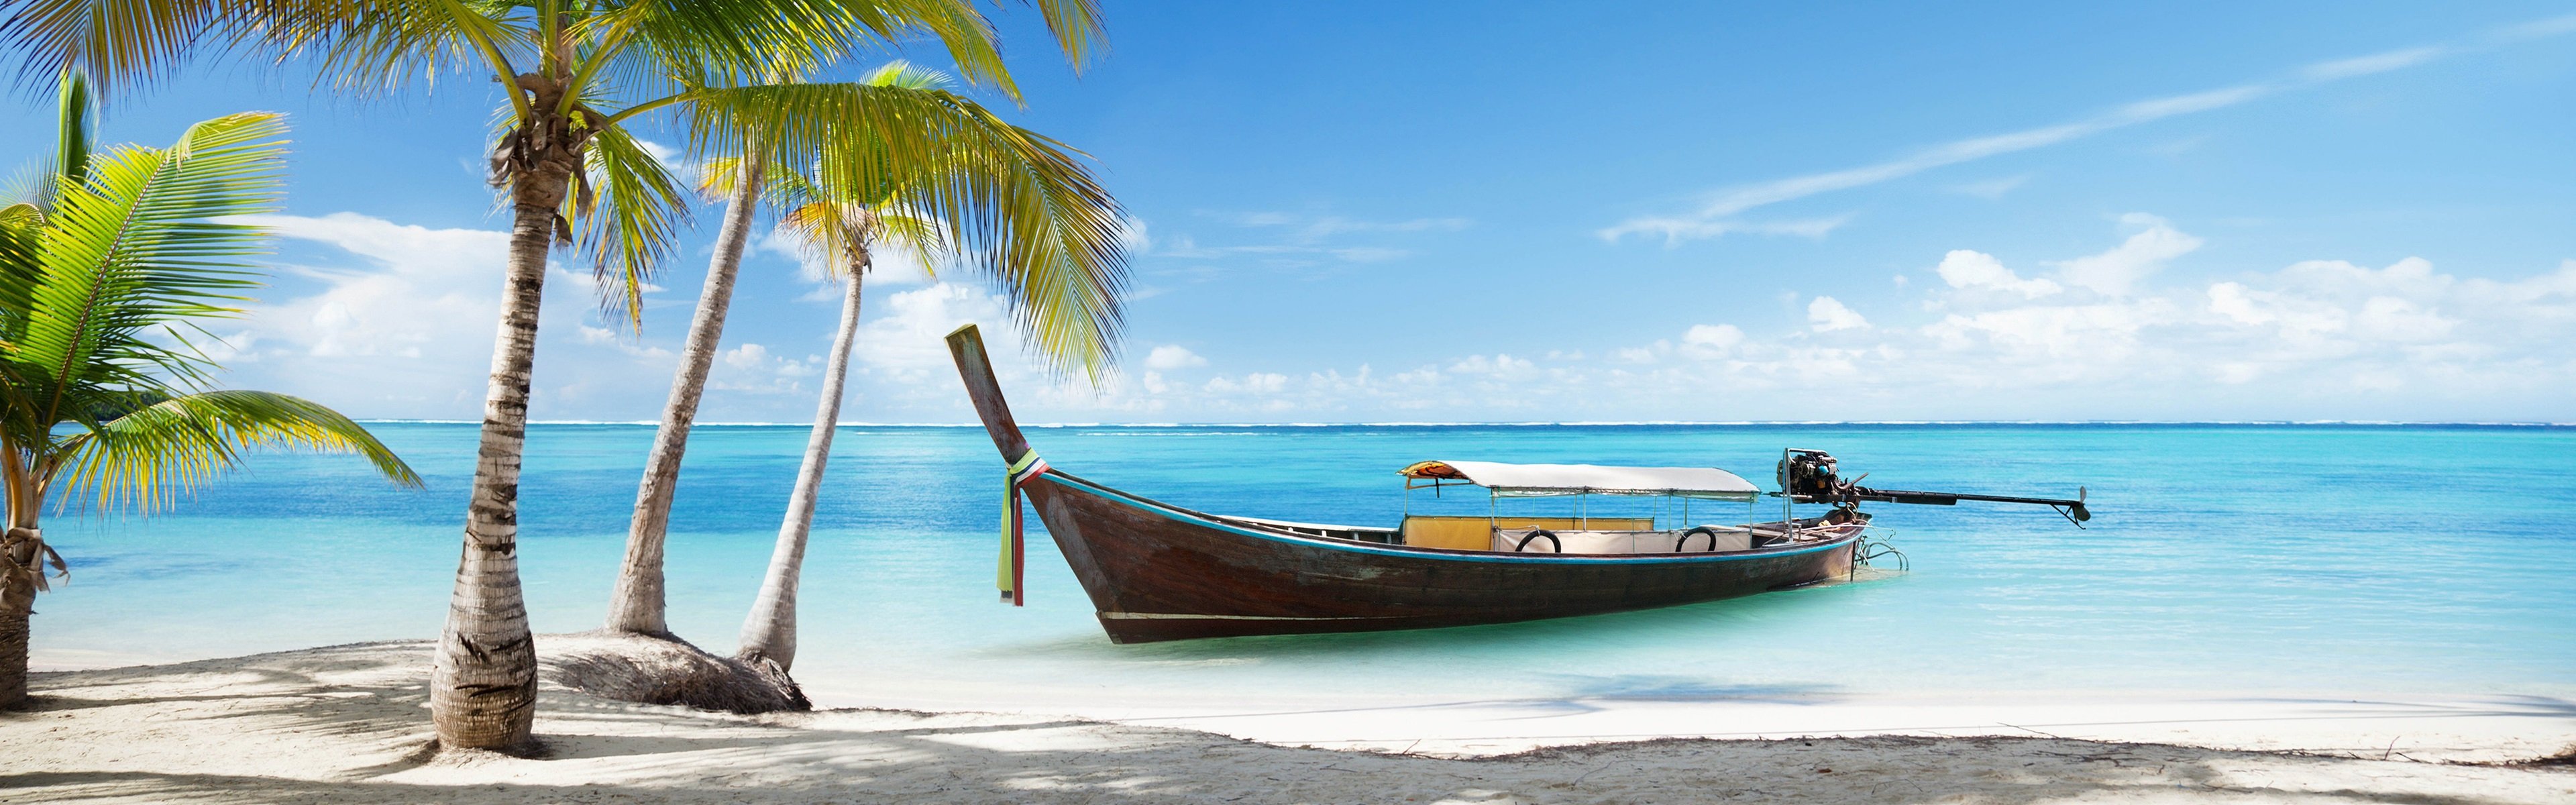 Wallpapers Thailand, beach, palms trees, sea, boat 3840x2160 UHD 4K